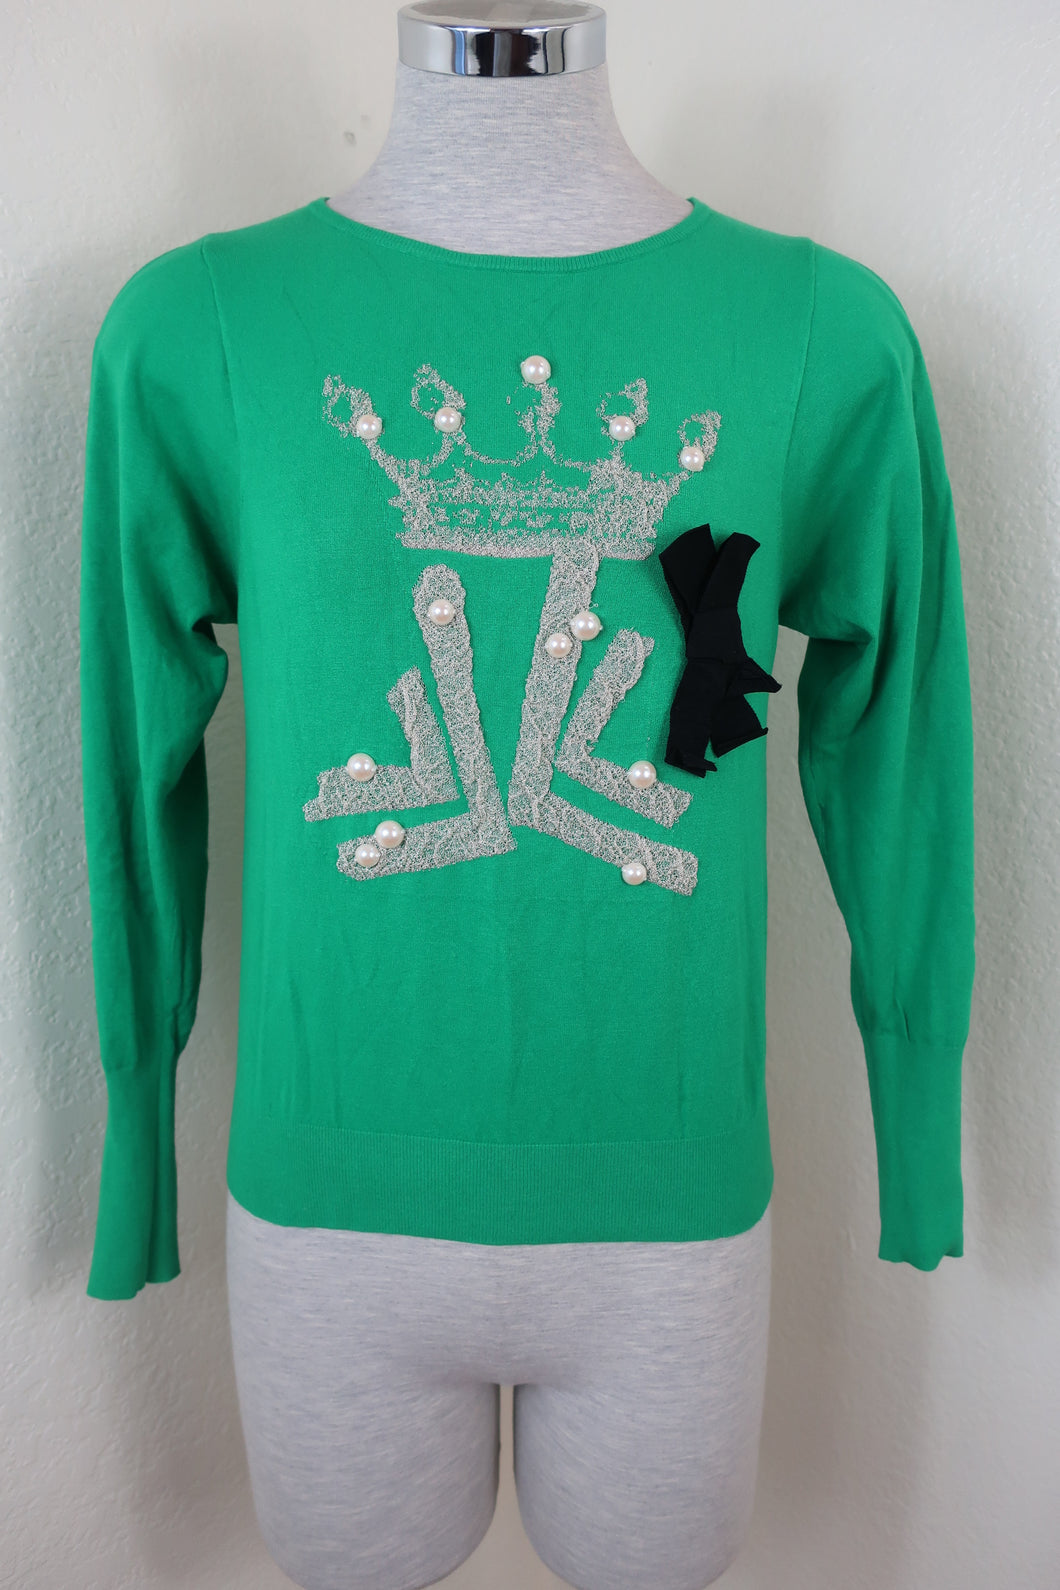 LANVIN En Bleu Embellished JL Logo Green Sweater sz 38 Small 2 3 4